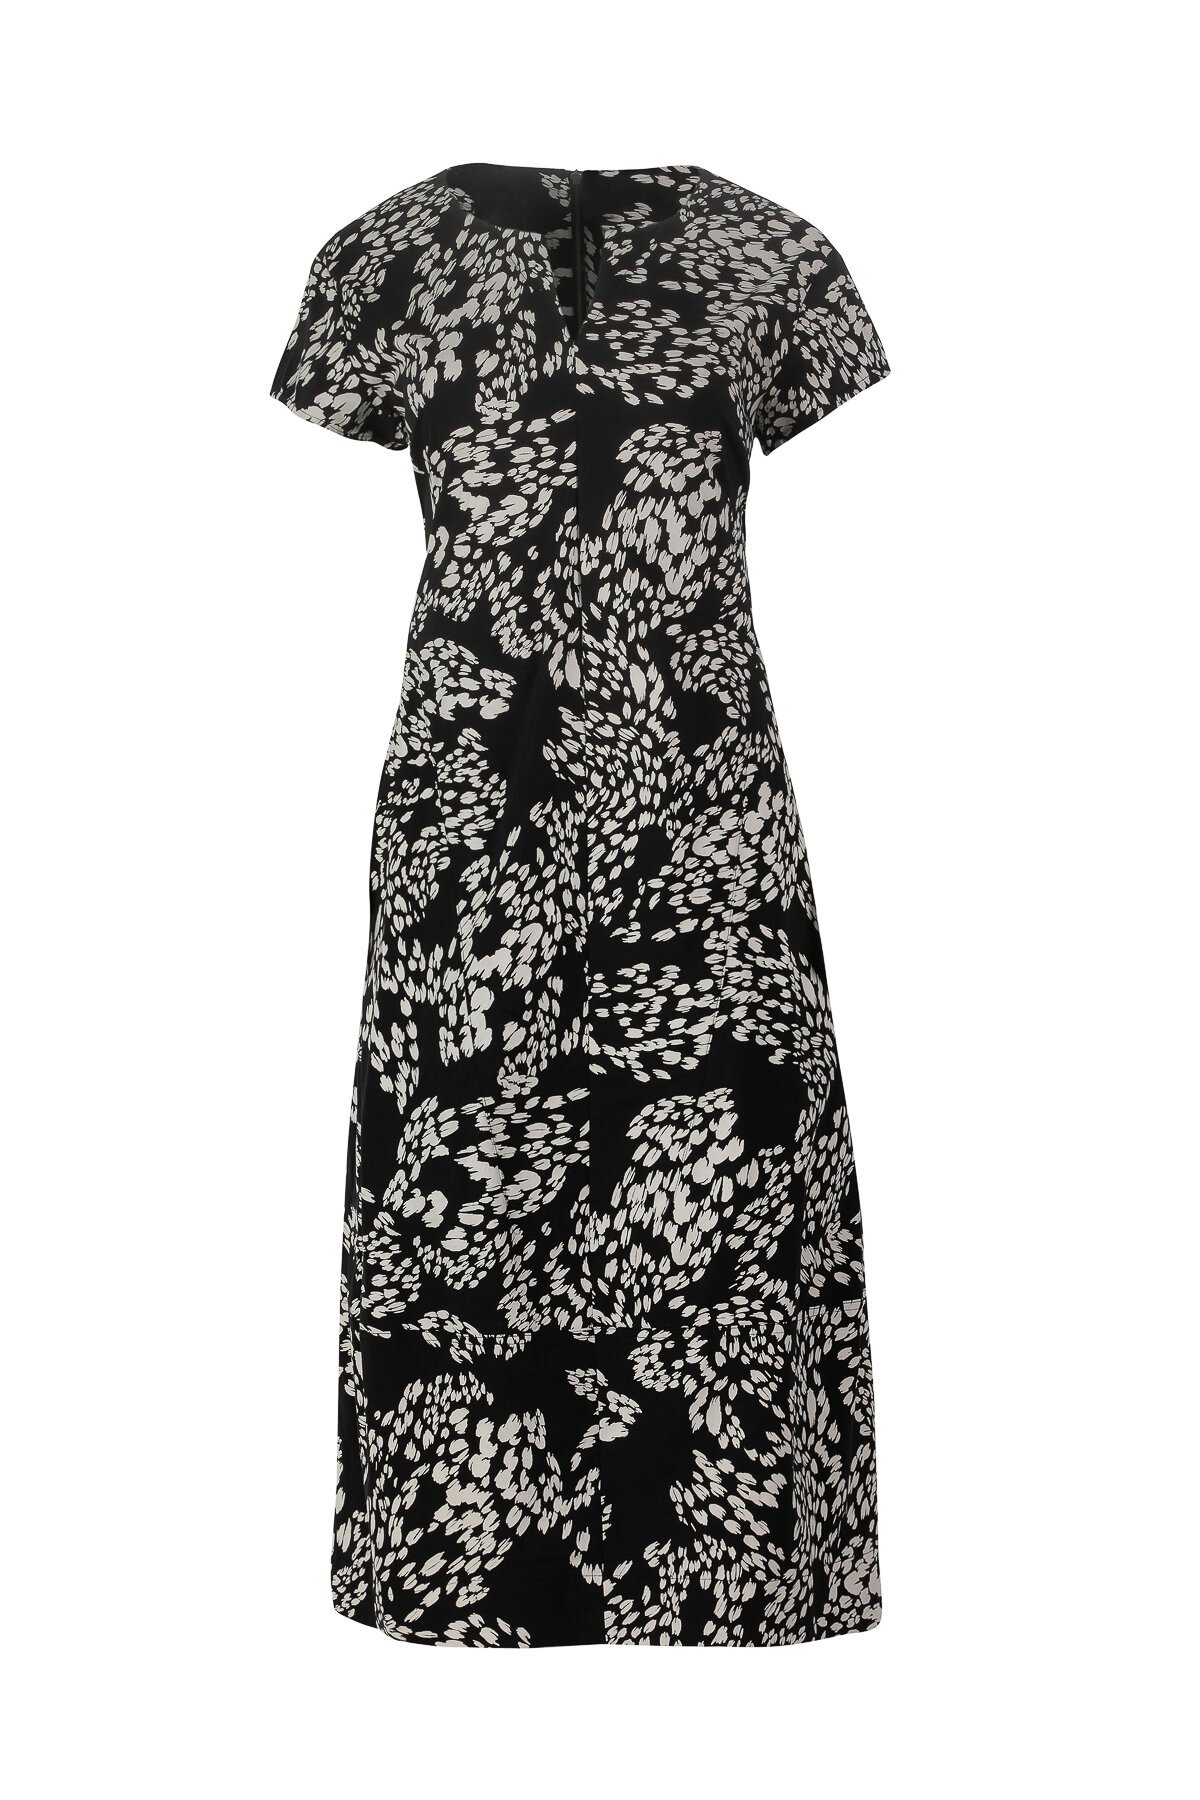 Verge Acrobat Paw Dress - Brand-Verge : Diahann Boutique - Verge S20